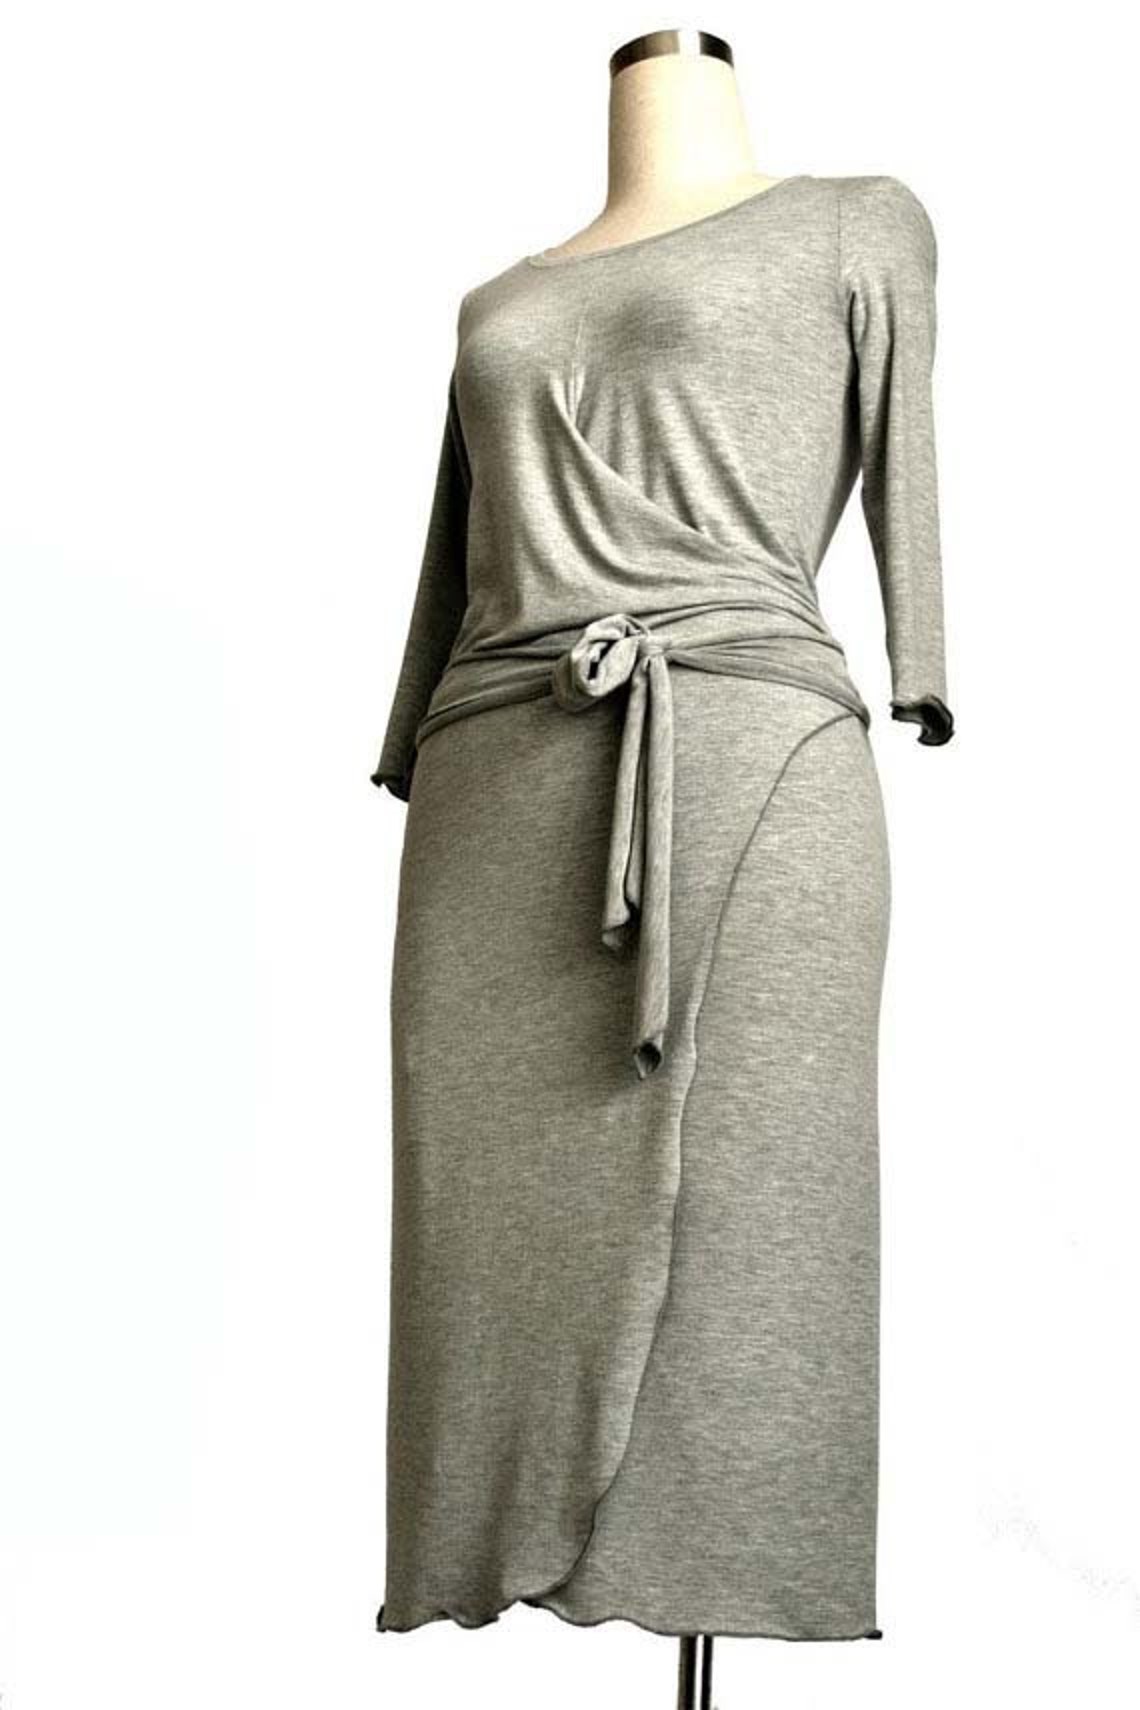 Wrap Dress with raglan sleeves Jersey wrap dress Midi dress | Etsy